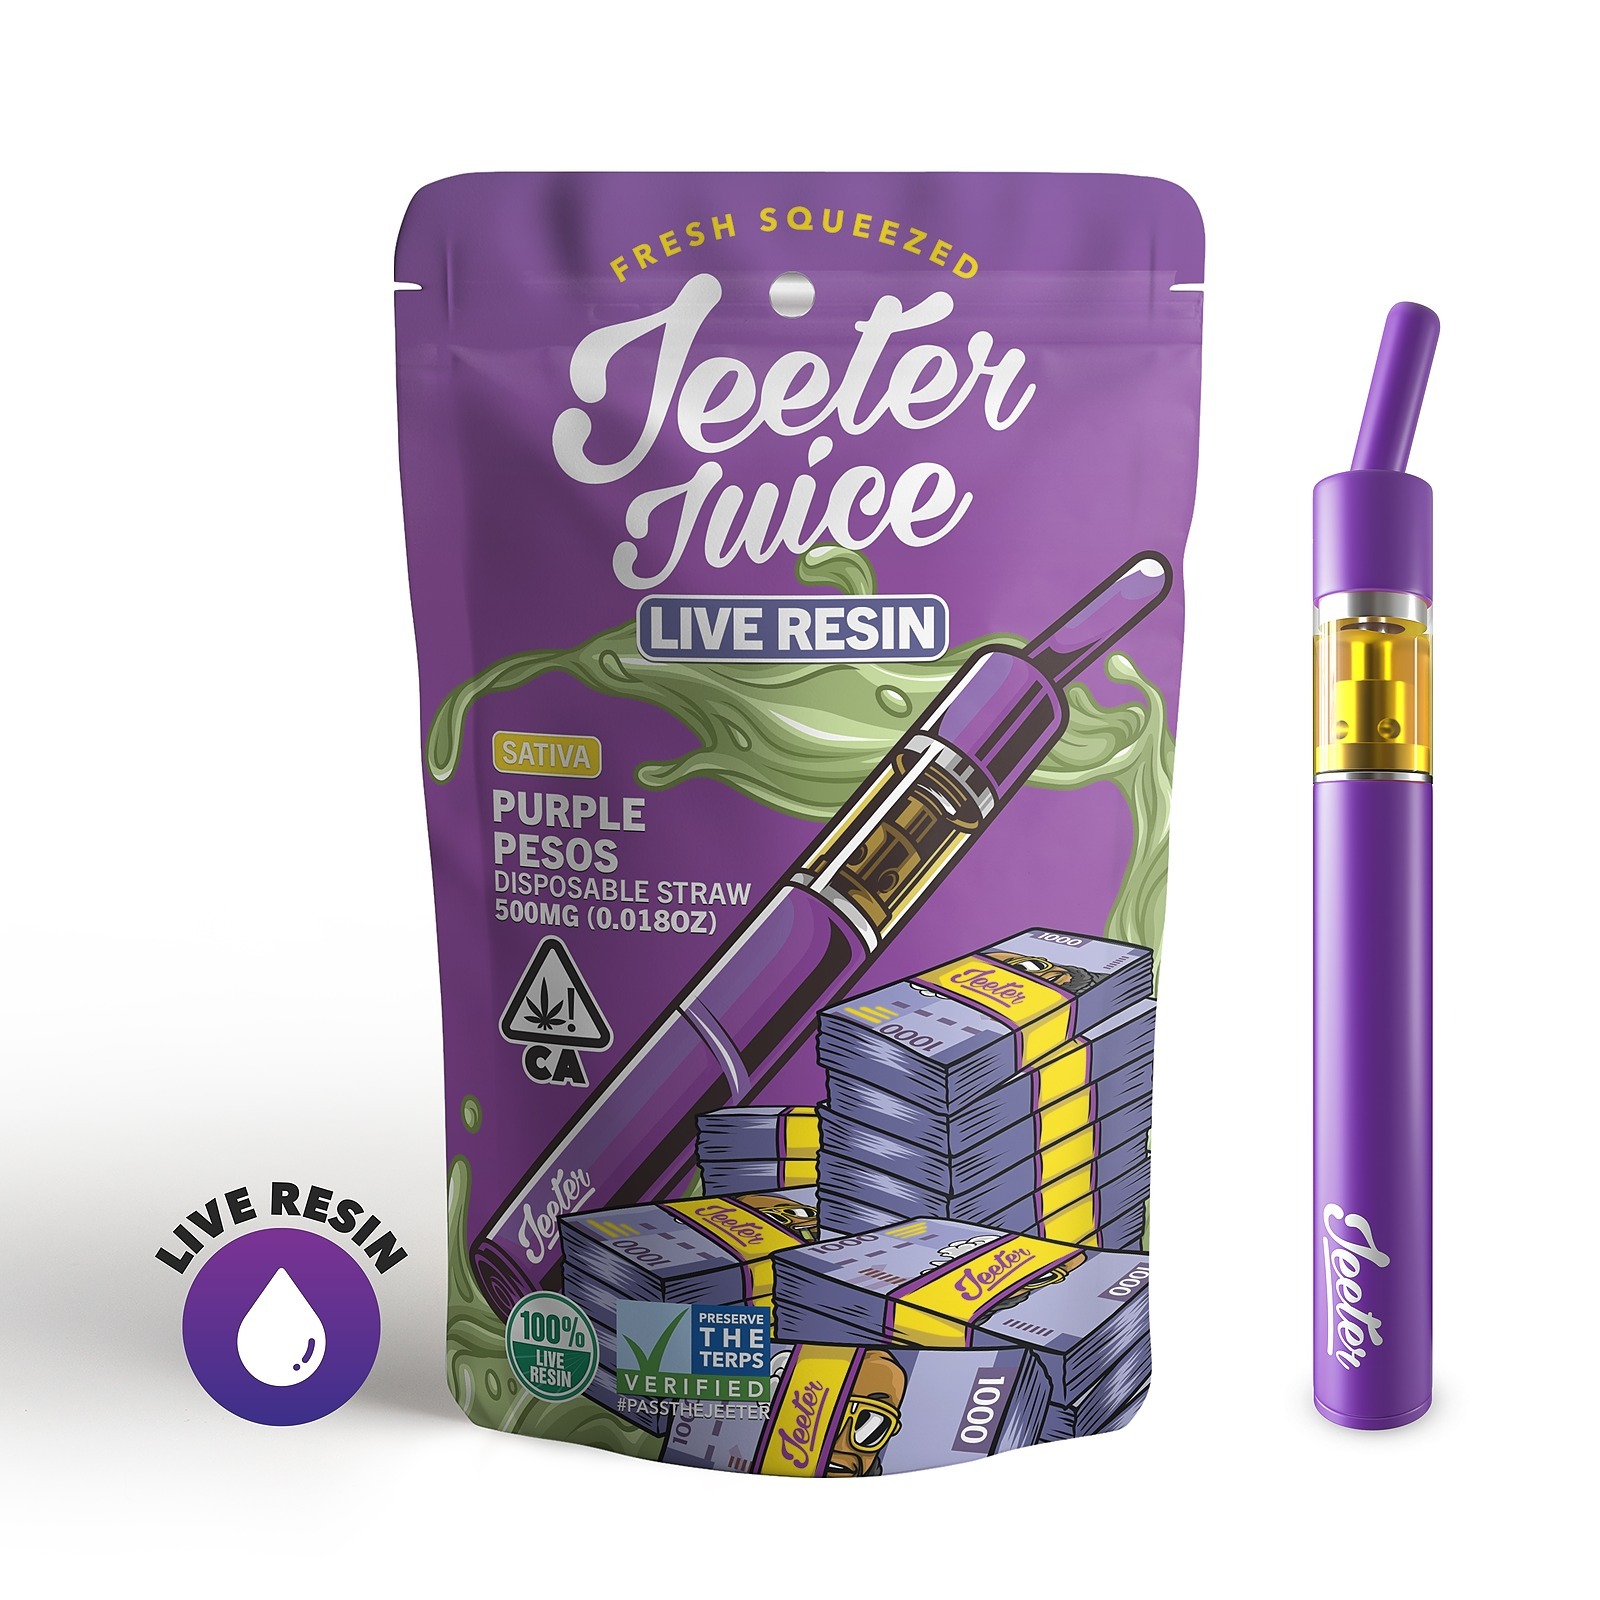 https://leafly-public.s3-us-west-2.amazonaws.com/products/photos/EWkpmKSNyoWuM9zRj8RQ_Jeeter-Juice-Live-Resin-Purple-Pesos.jpg